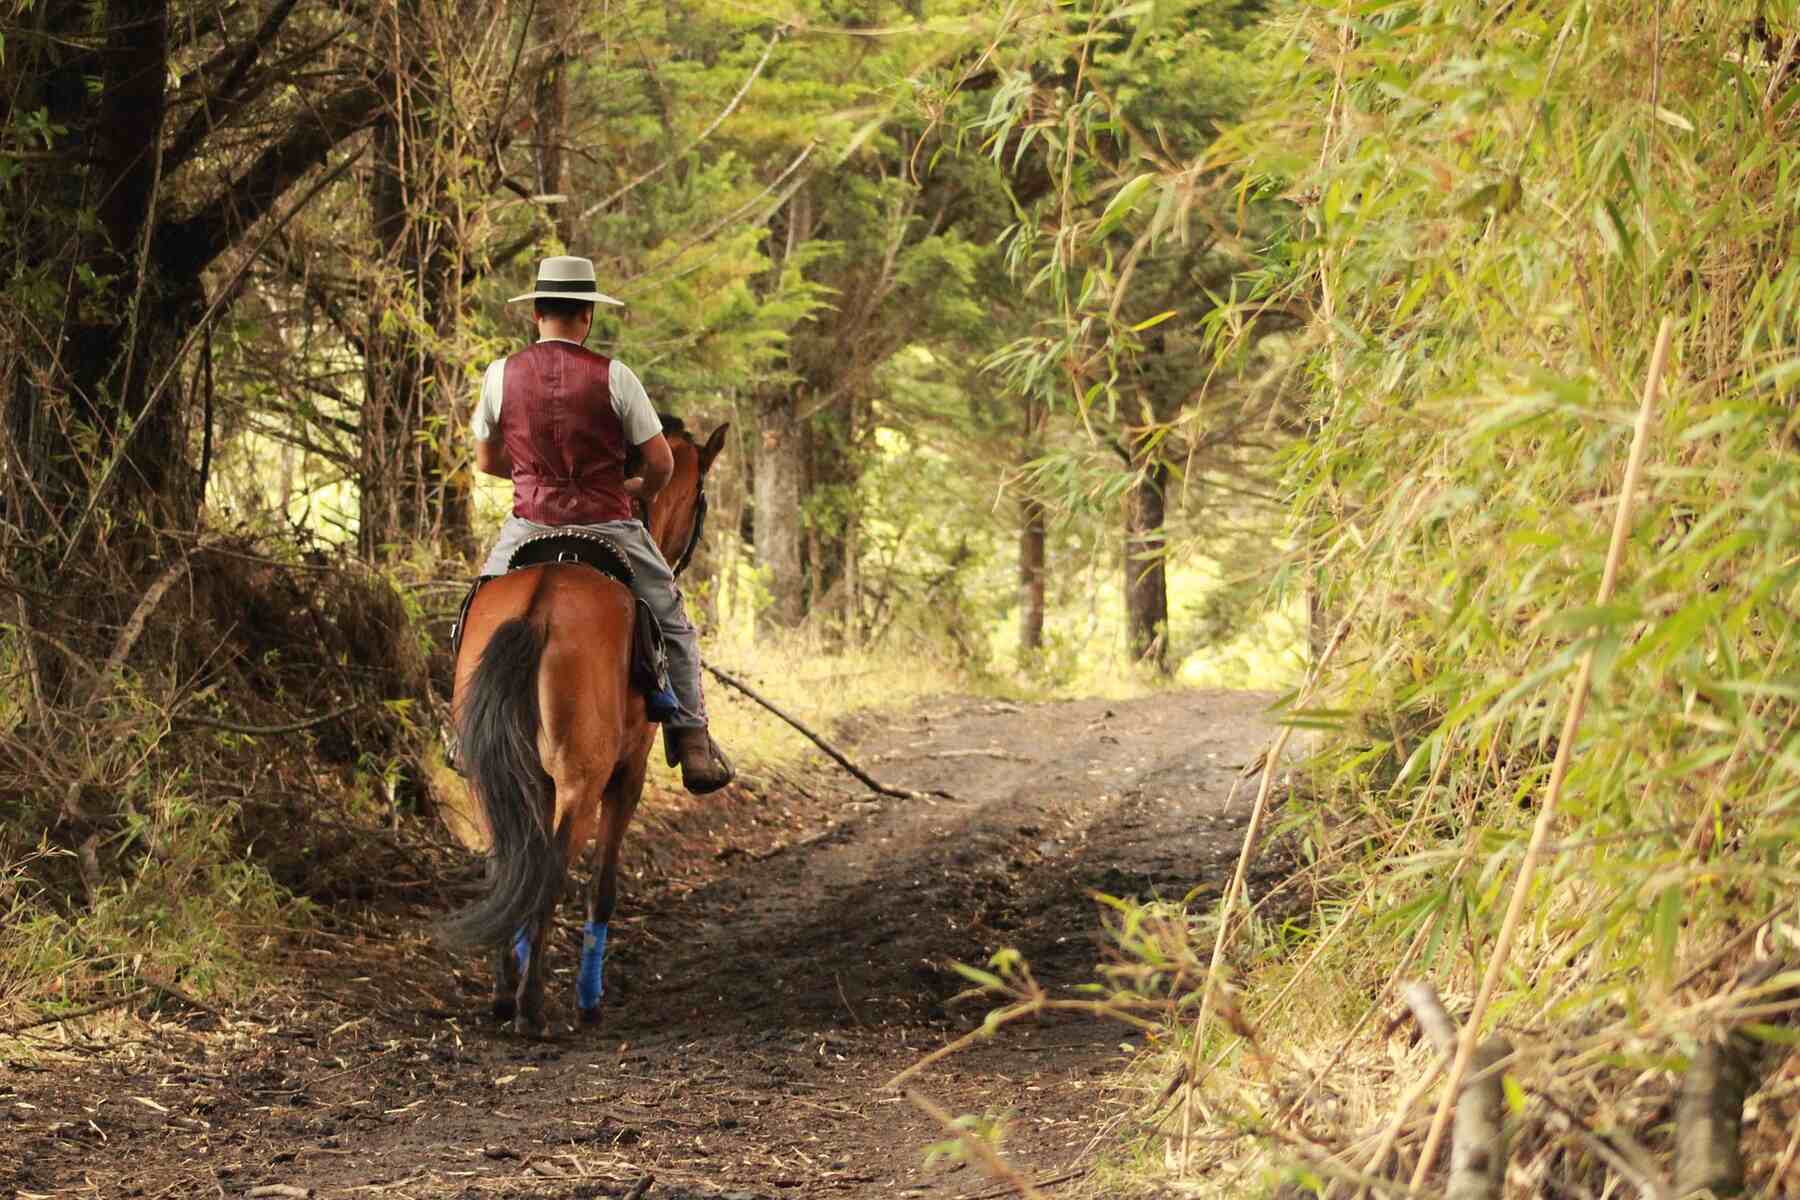 A man on horseback riding through a forest path